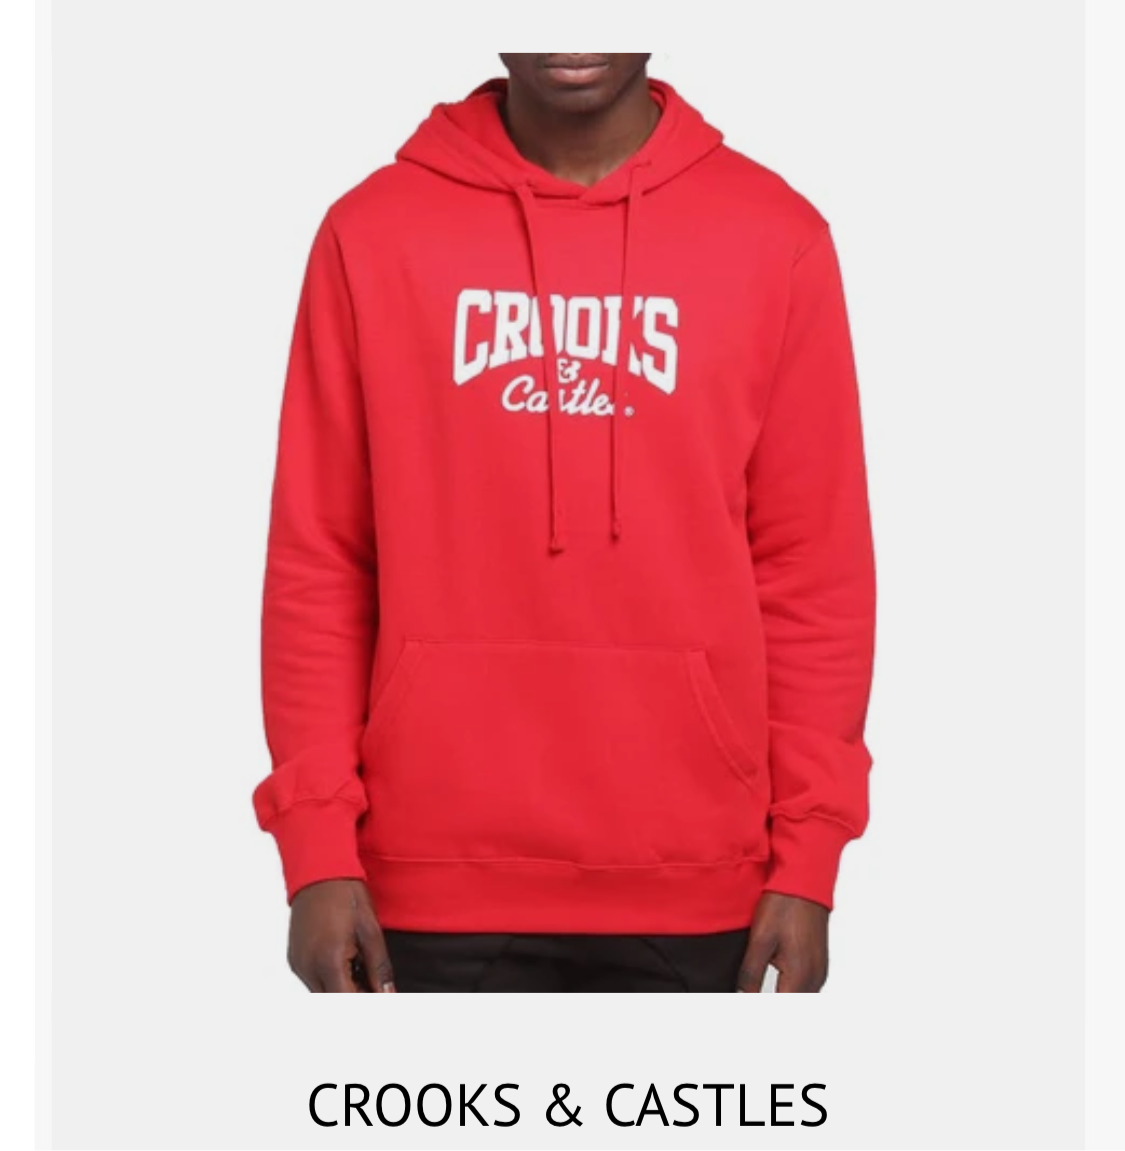 Crooks & Castles Men’s Hooded Sweater Shirt